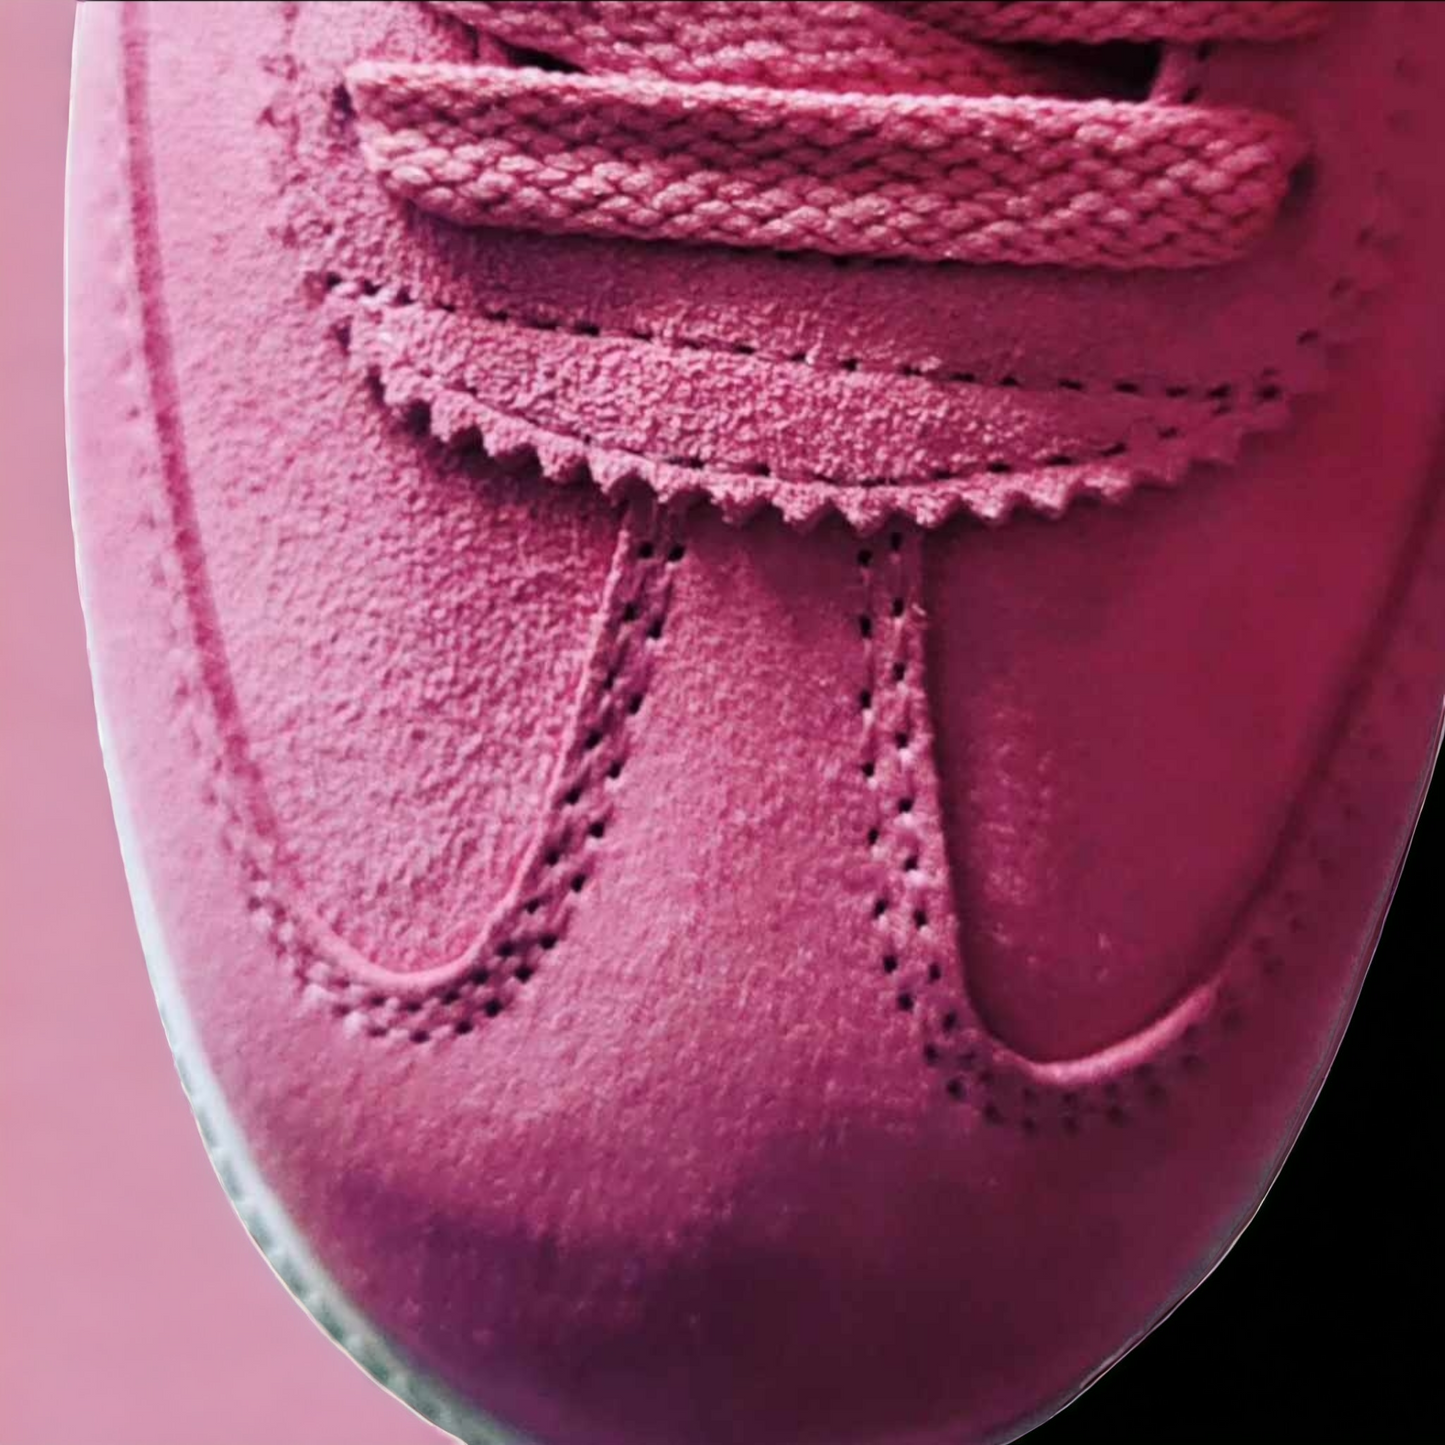 Sneaker Life - Pink !